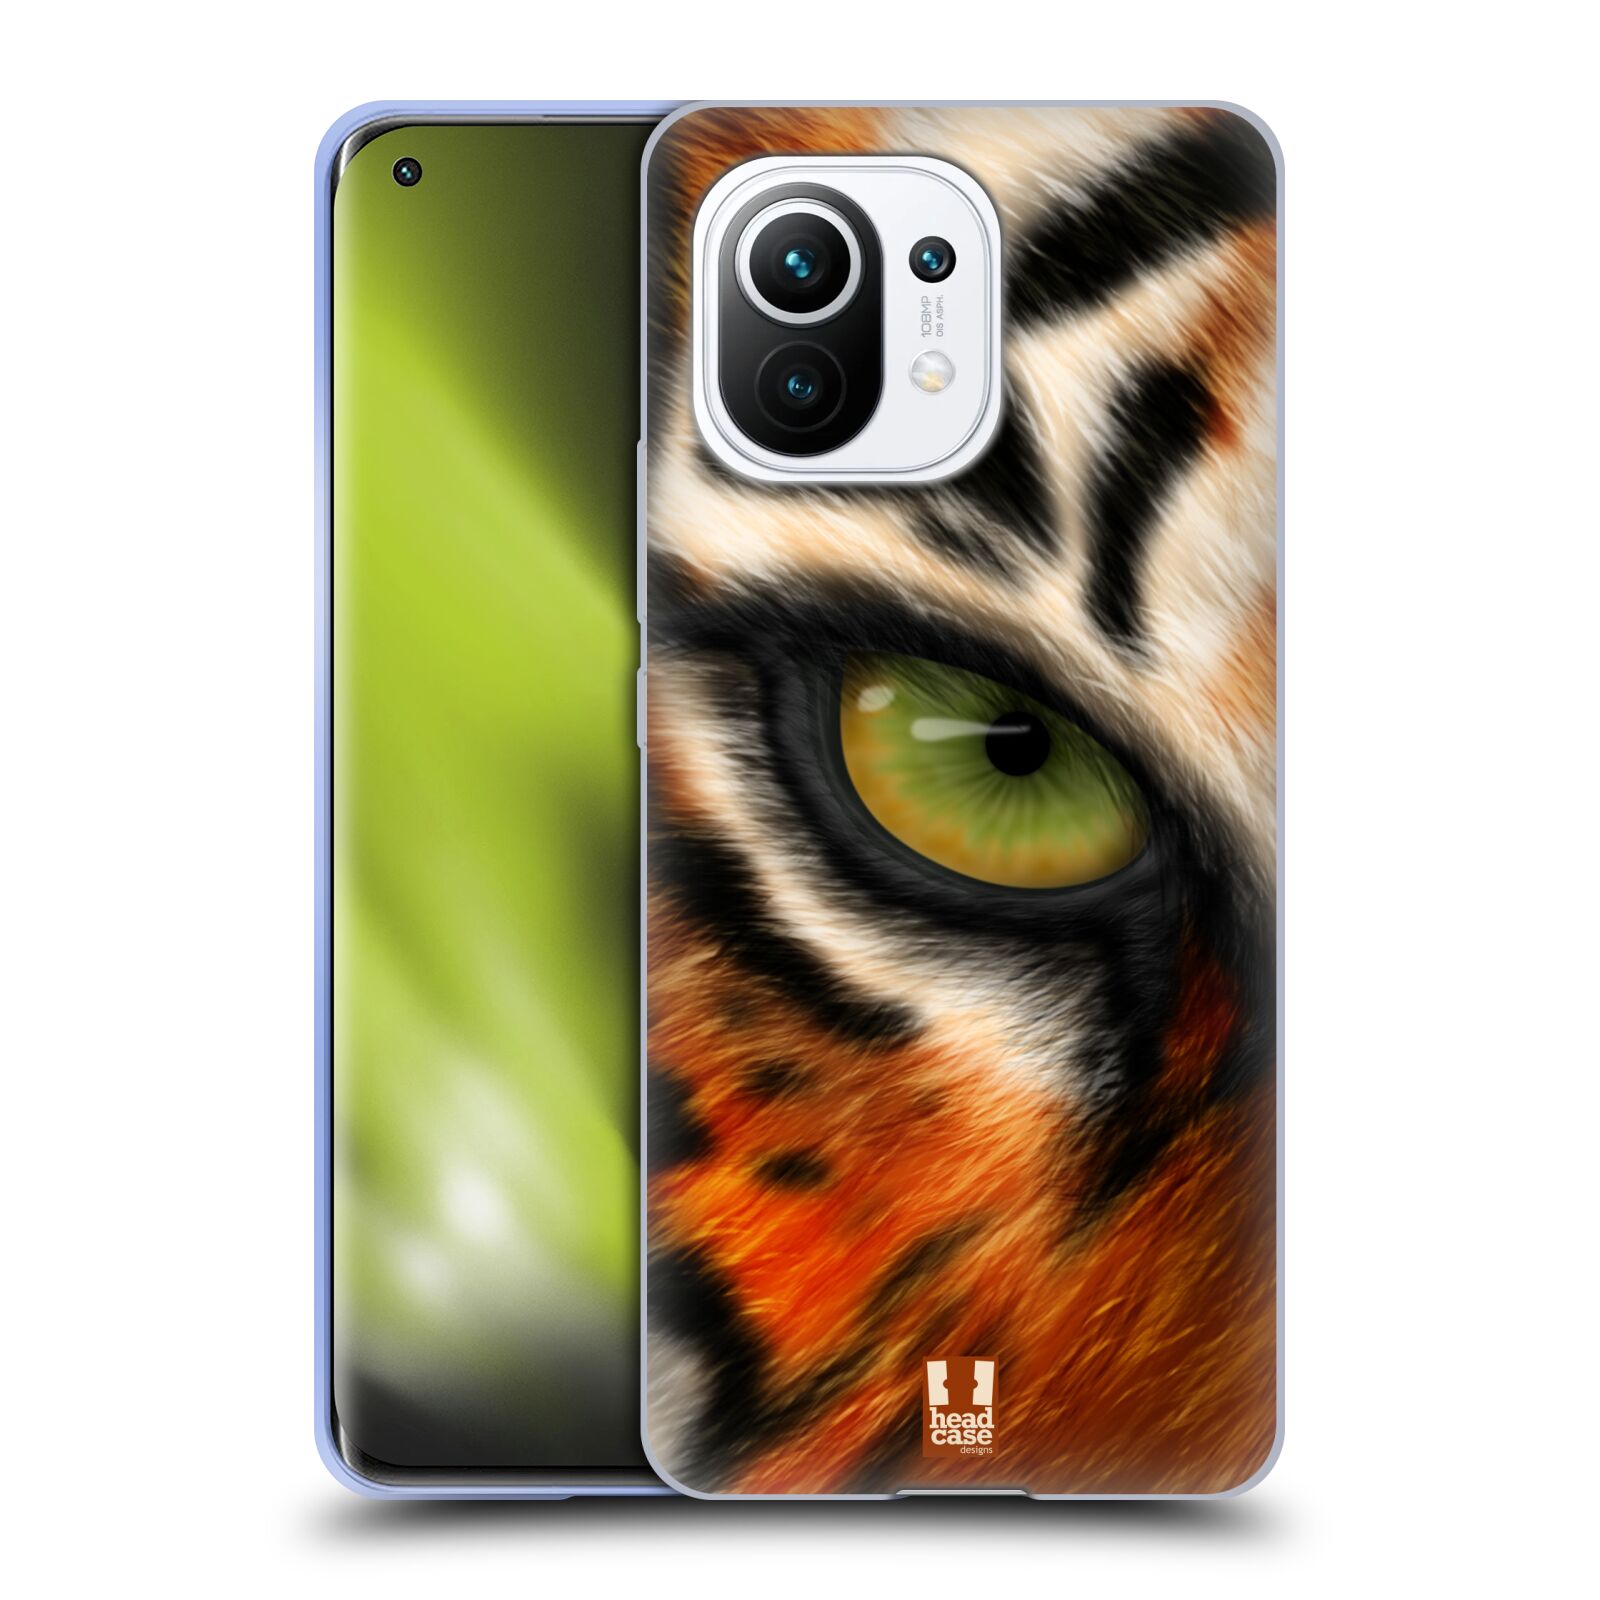 Plastový obal HEAD CASE na mobil Xiaomi Mi 11 vzor pohled zvířete oko tygr